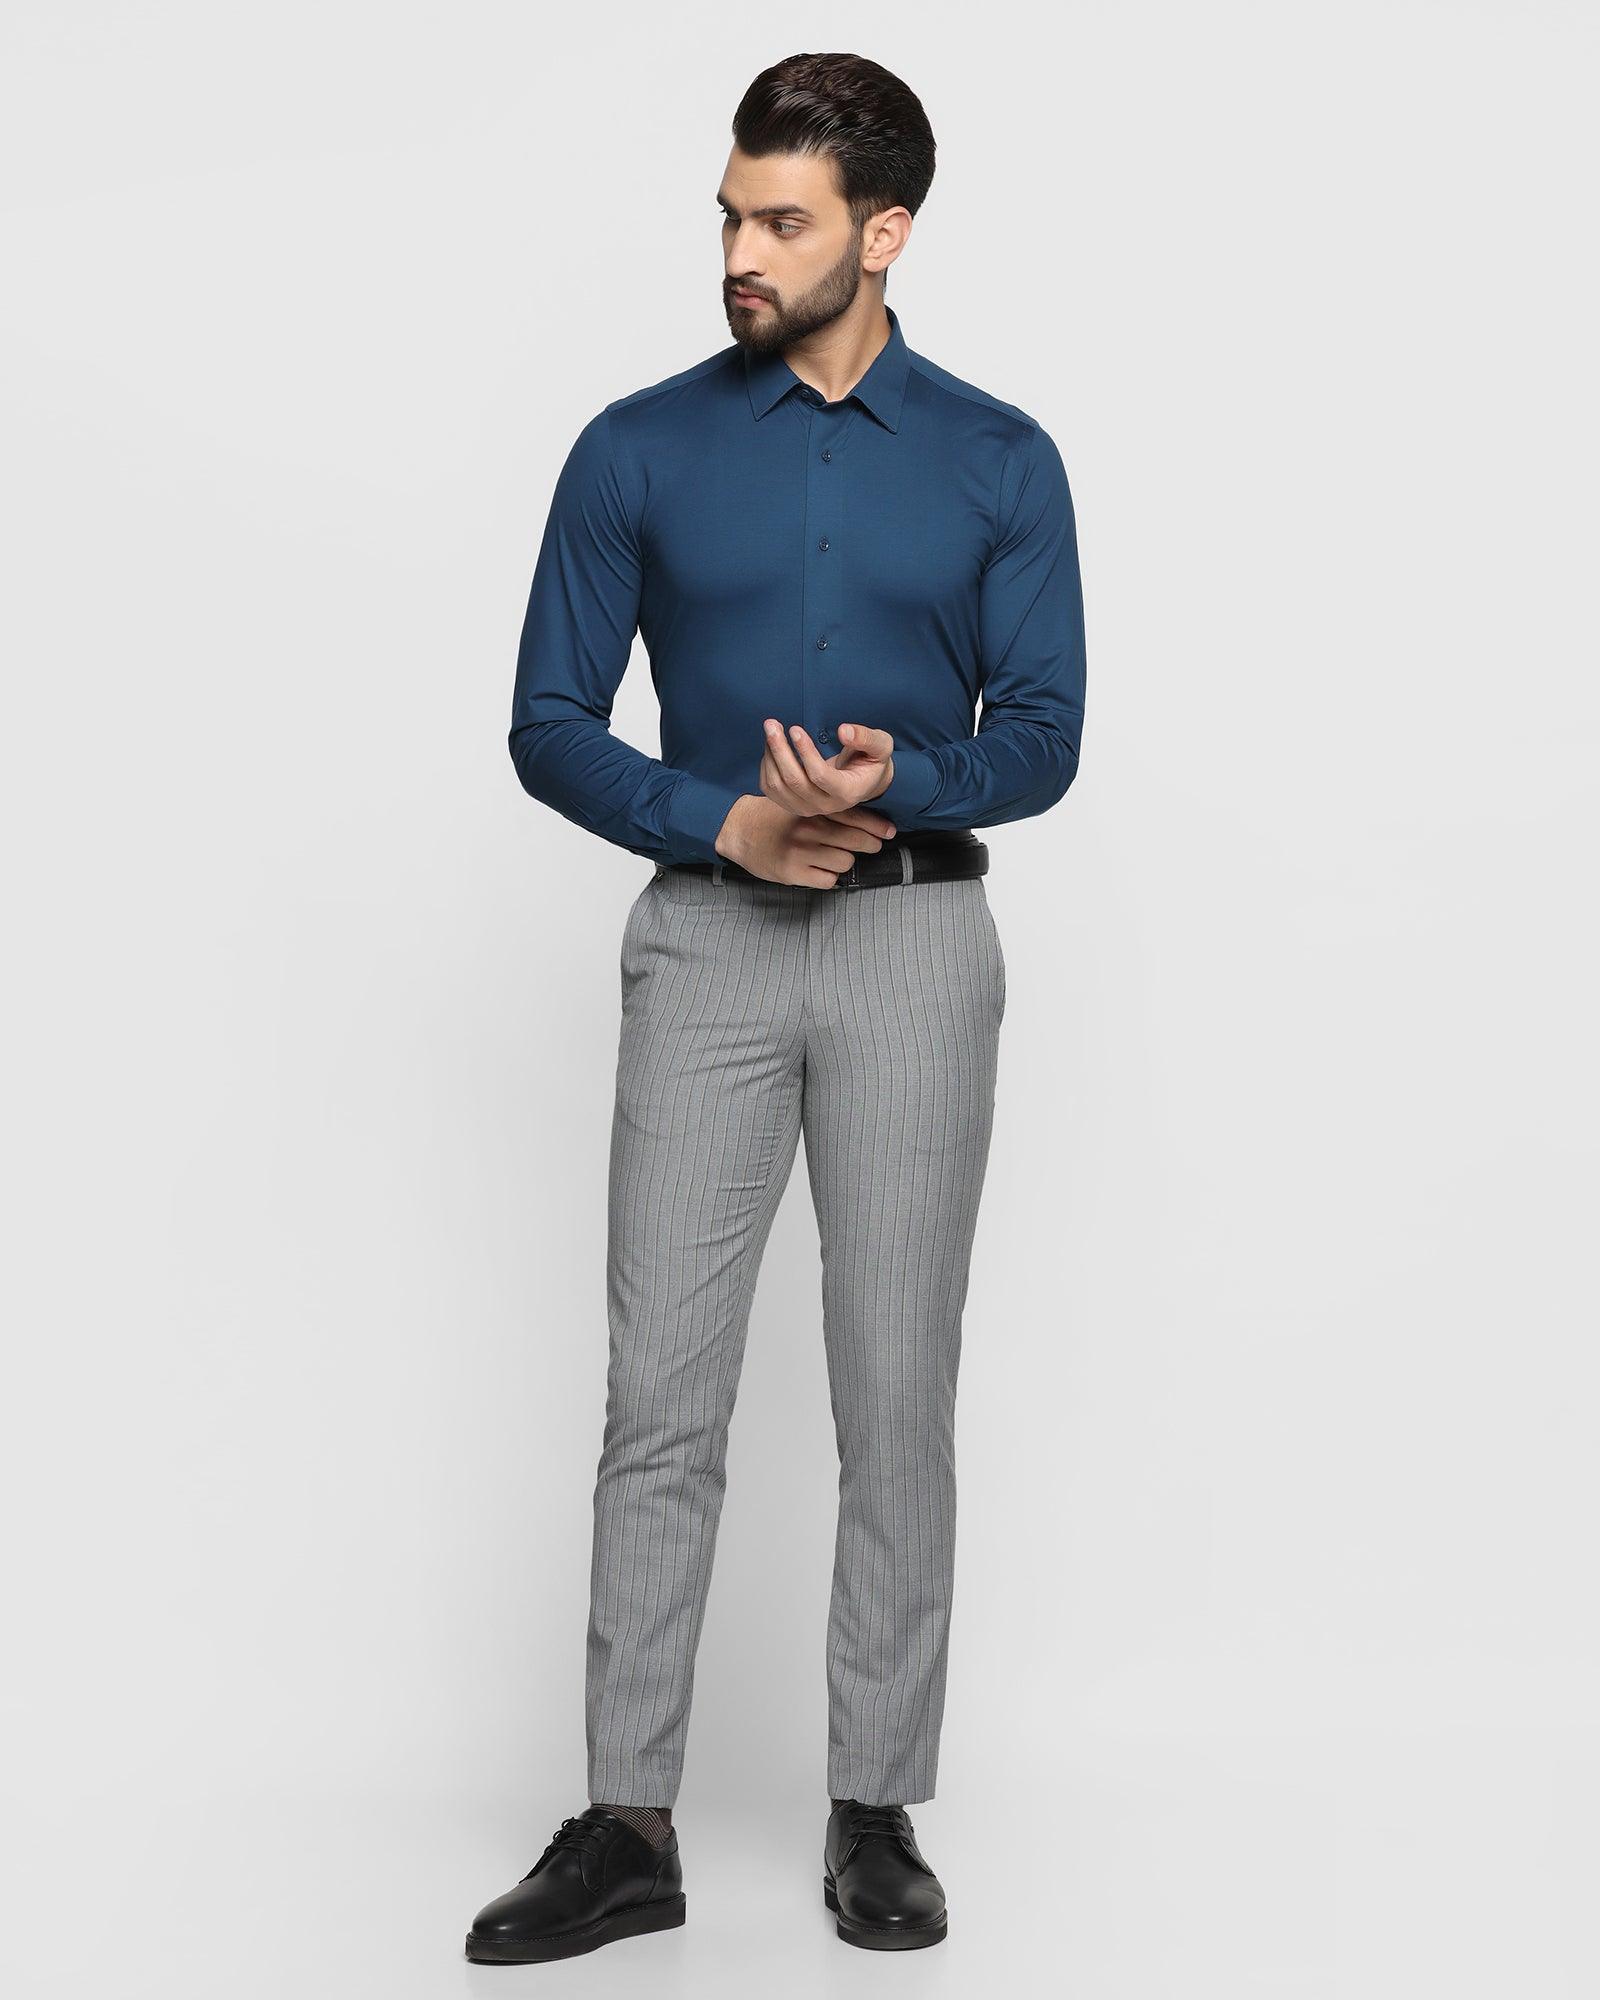 Formal Blue Solid Shirt - Jean